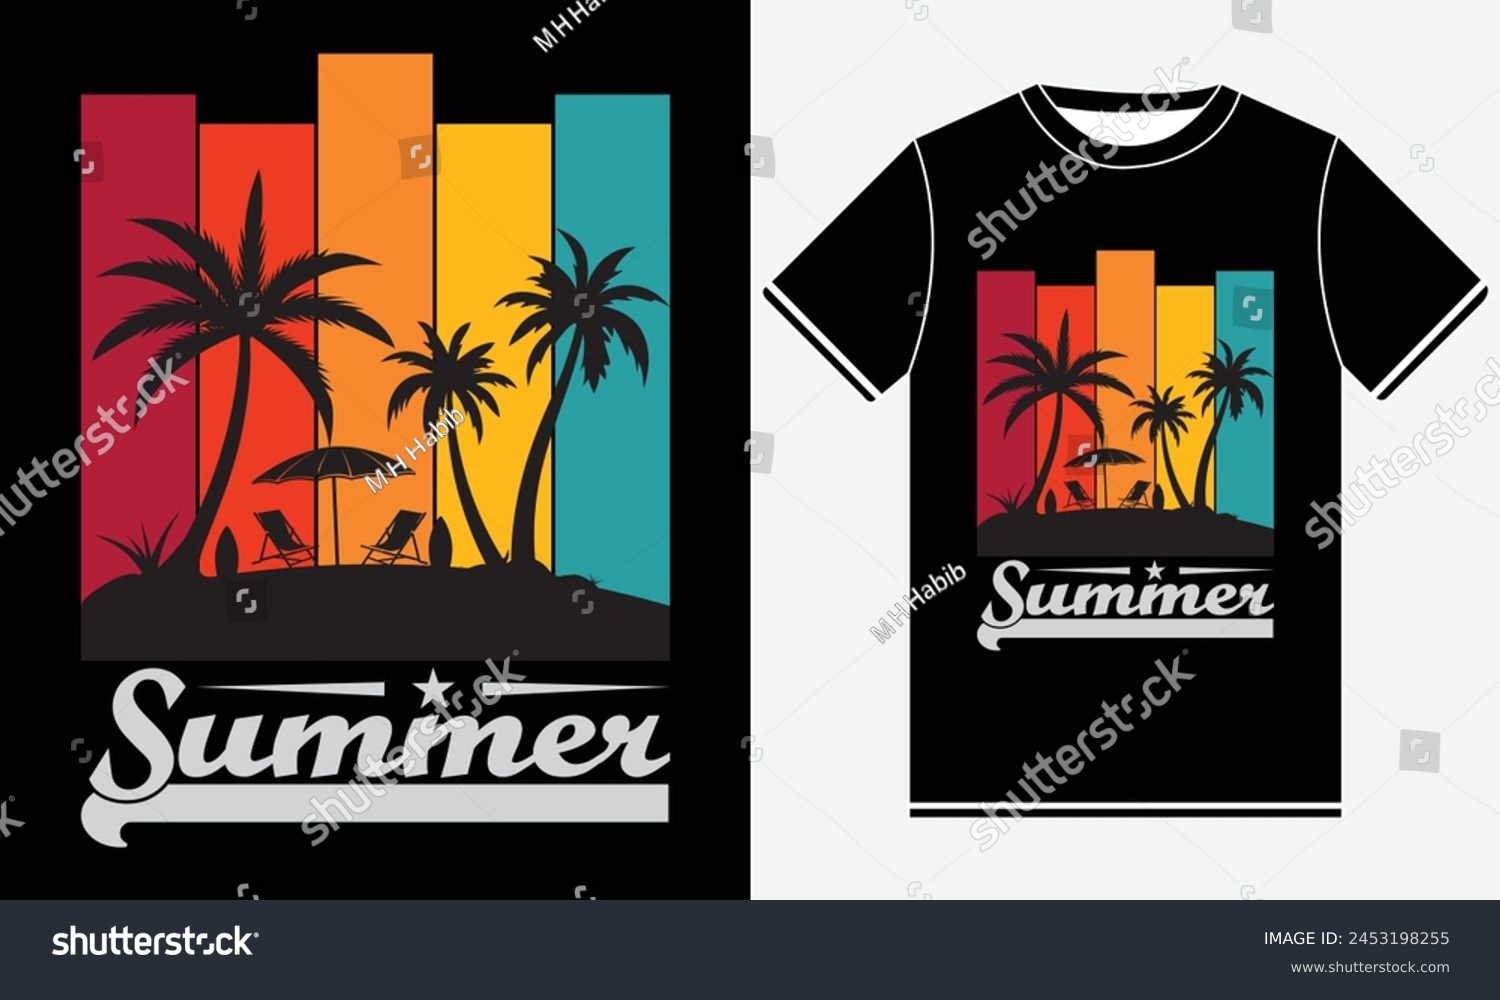 SVG of Summer t-shirts design, Paradise T-shirt Designs, Vintage Tshirt Design, illustration vector art, Sunset Print T-shirts, Hot Summer, Summer T-shirt Design Template, Sun, Print svg